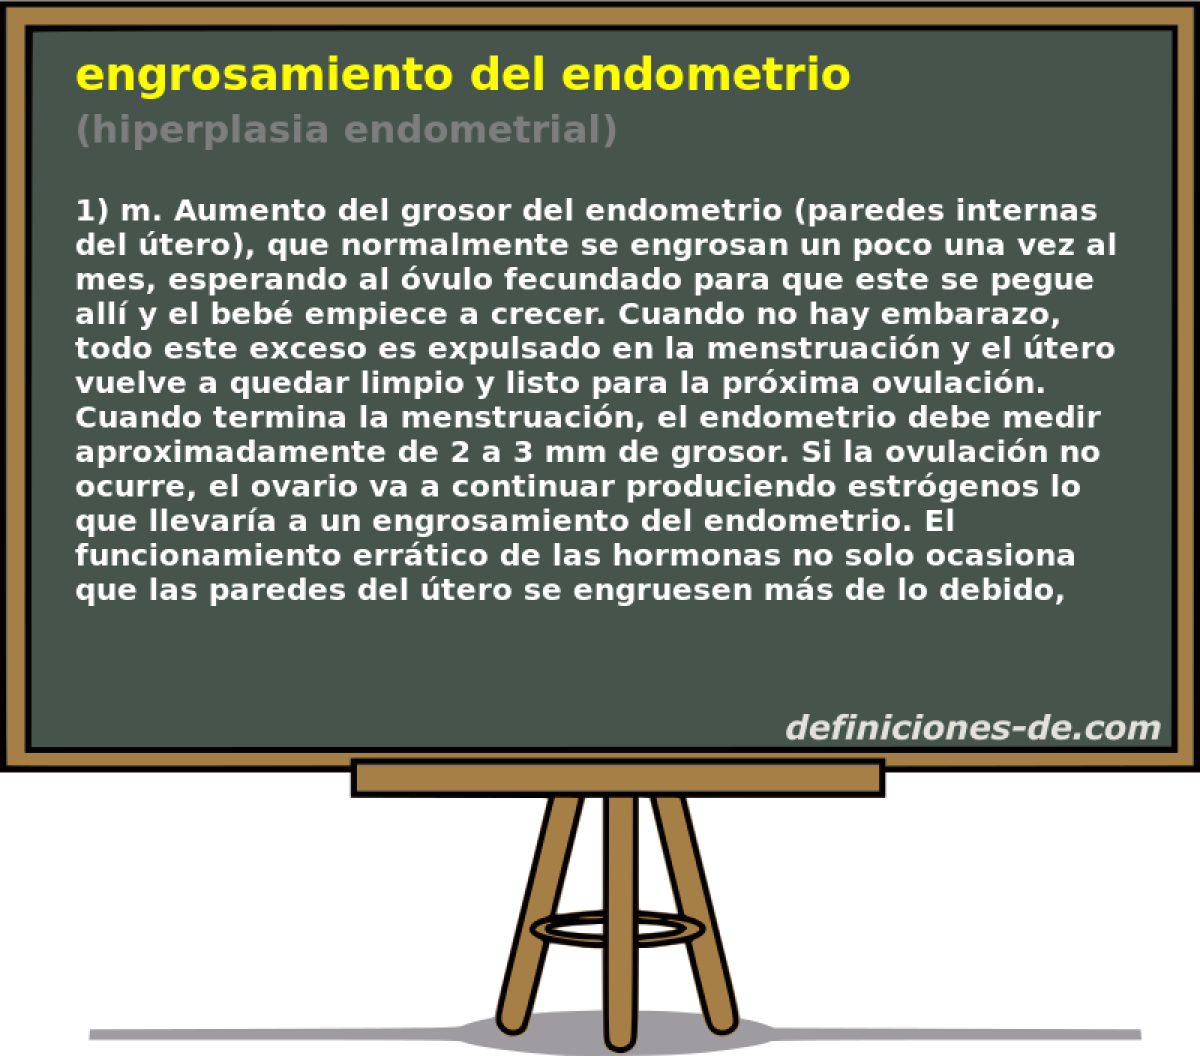 engrosamiento del endometrio (hiperplasia endometrial)